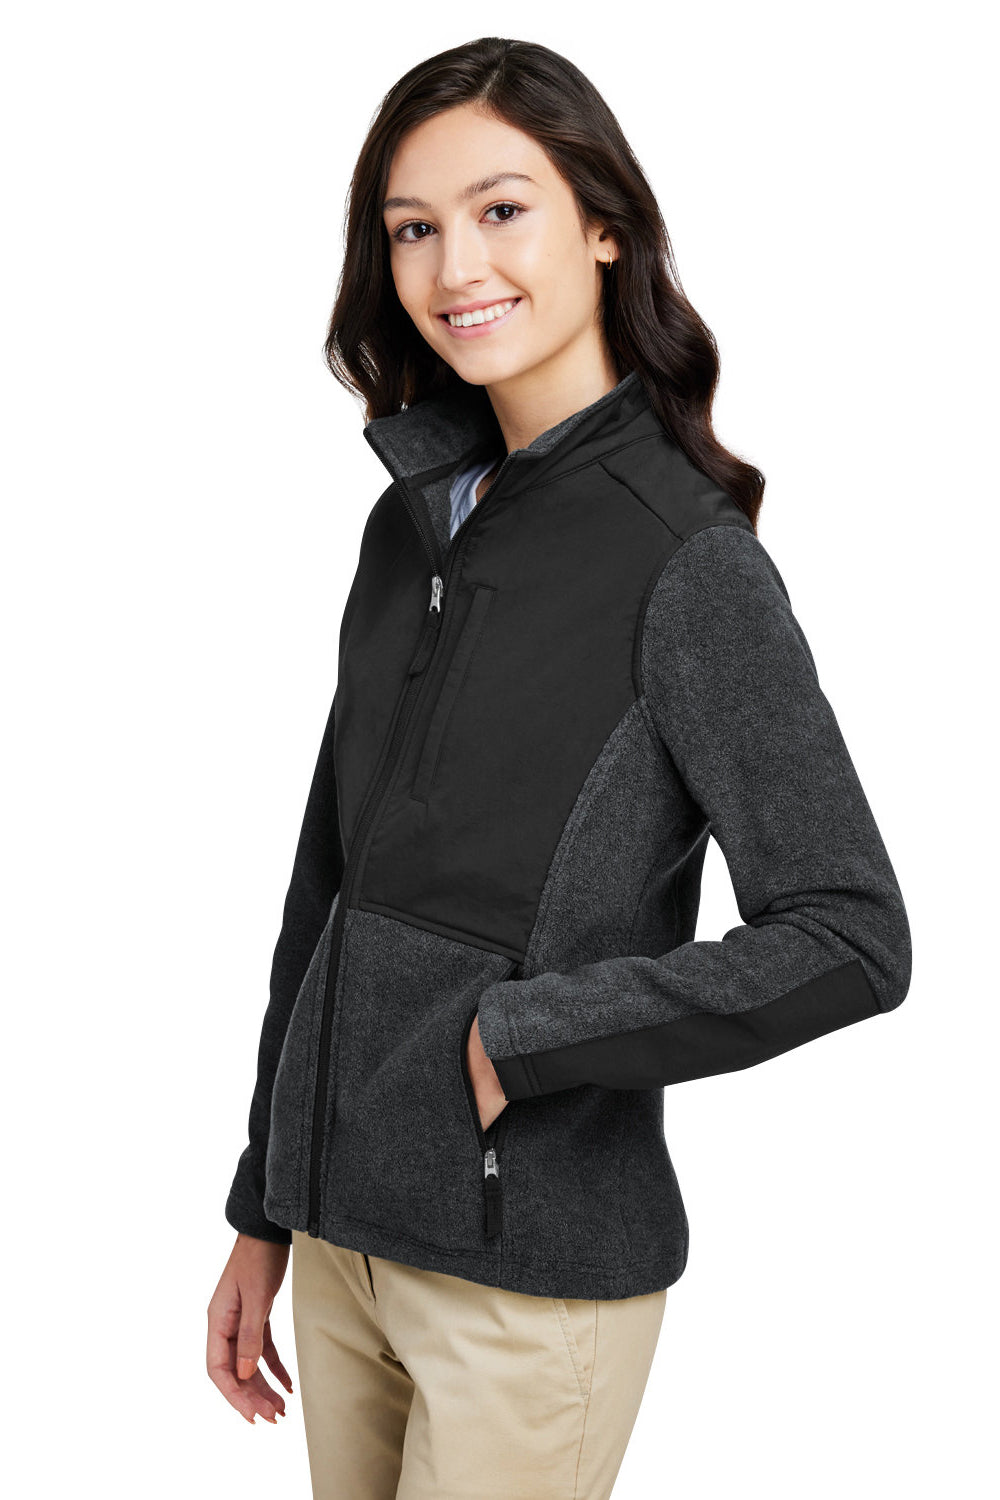 Core 365 CE890W Womens Journey Summit Hybrid Full Zip Jacket Heather Charcoal Grey/Black 3Q